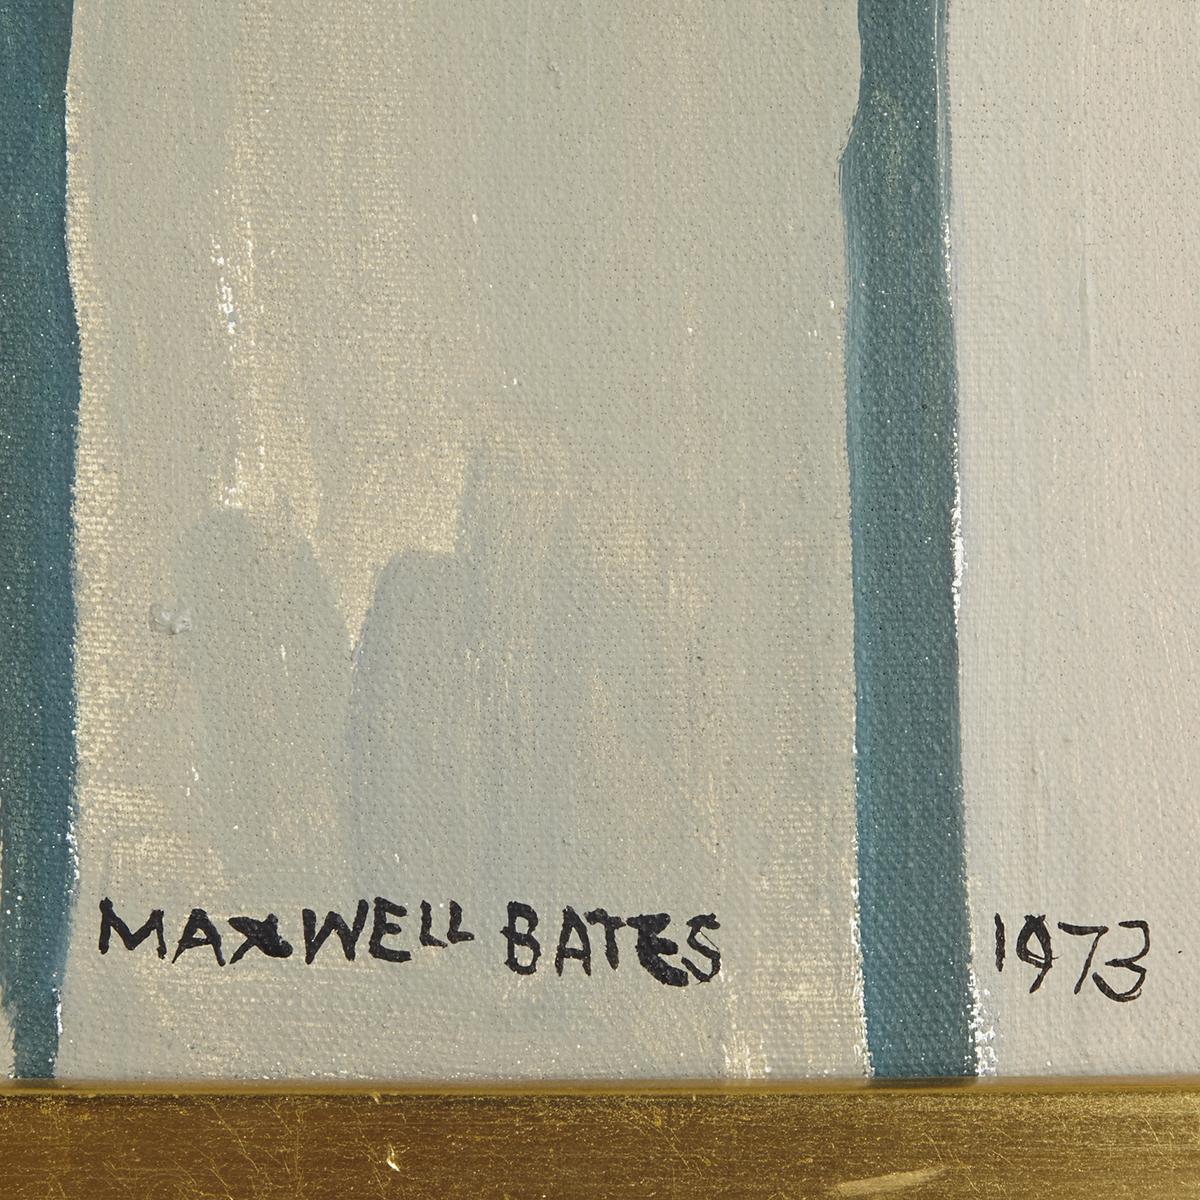 MAXWELL BENNETT BATES, R.C.A.